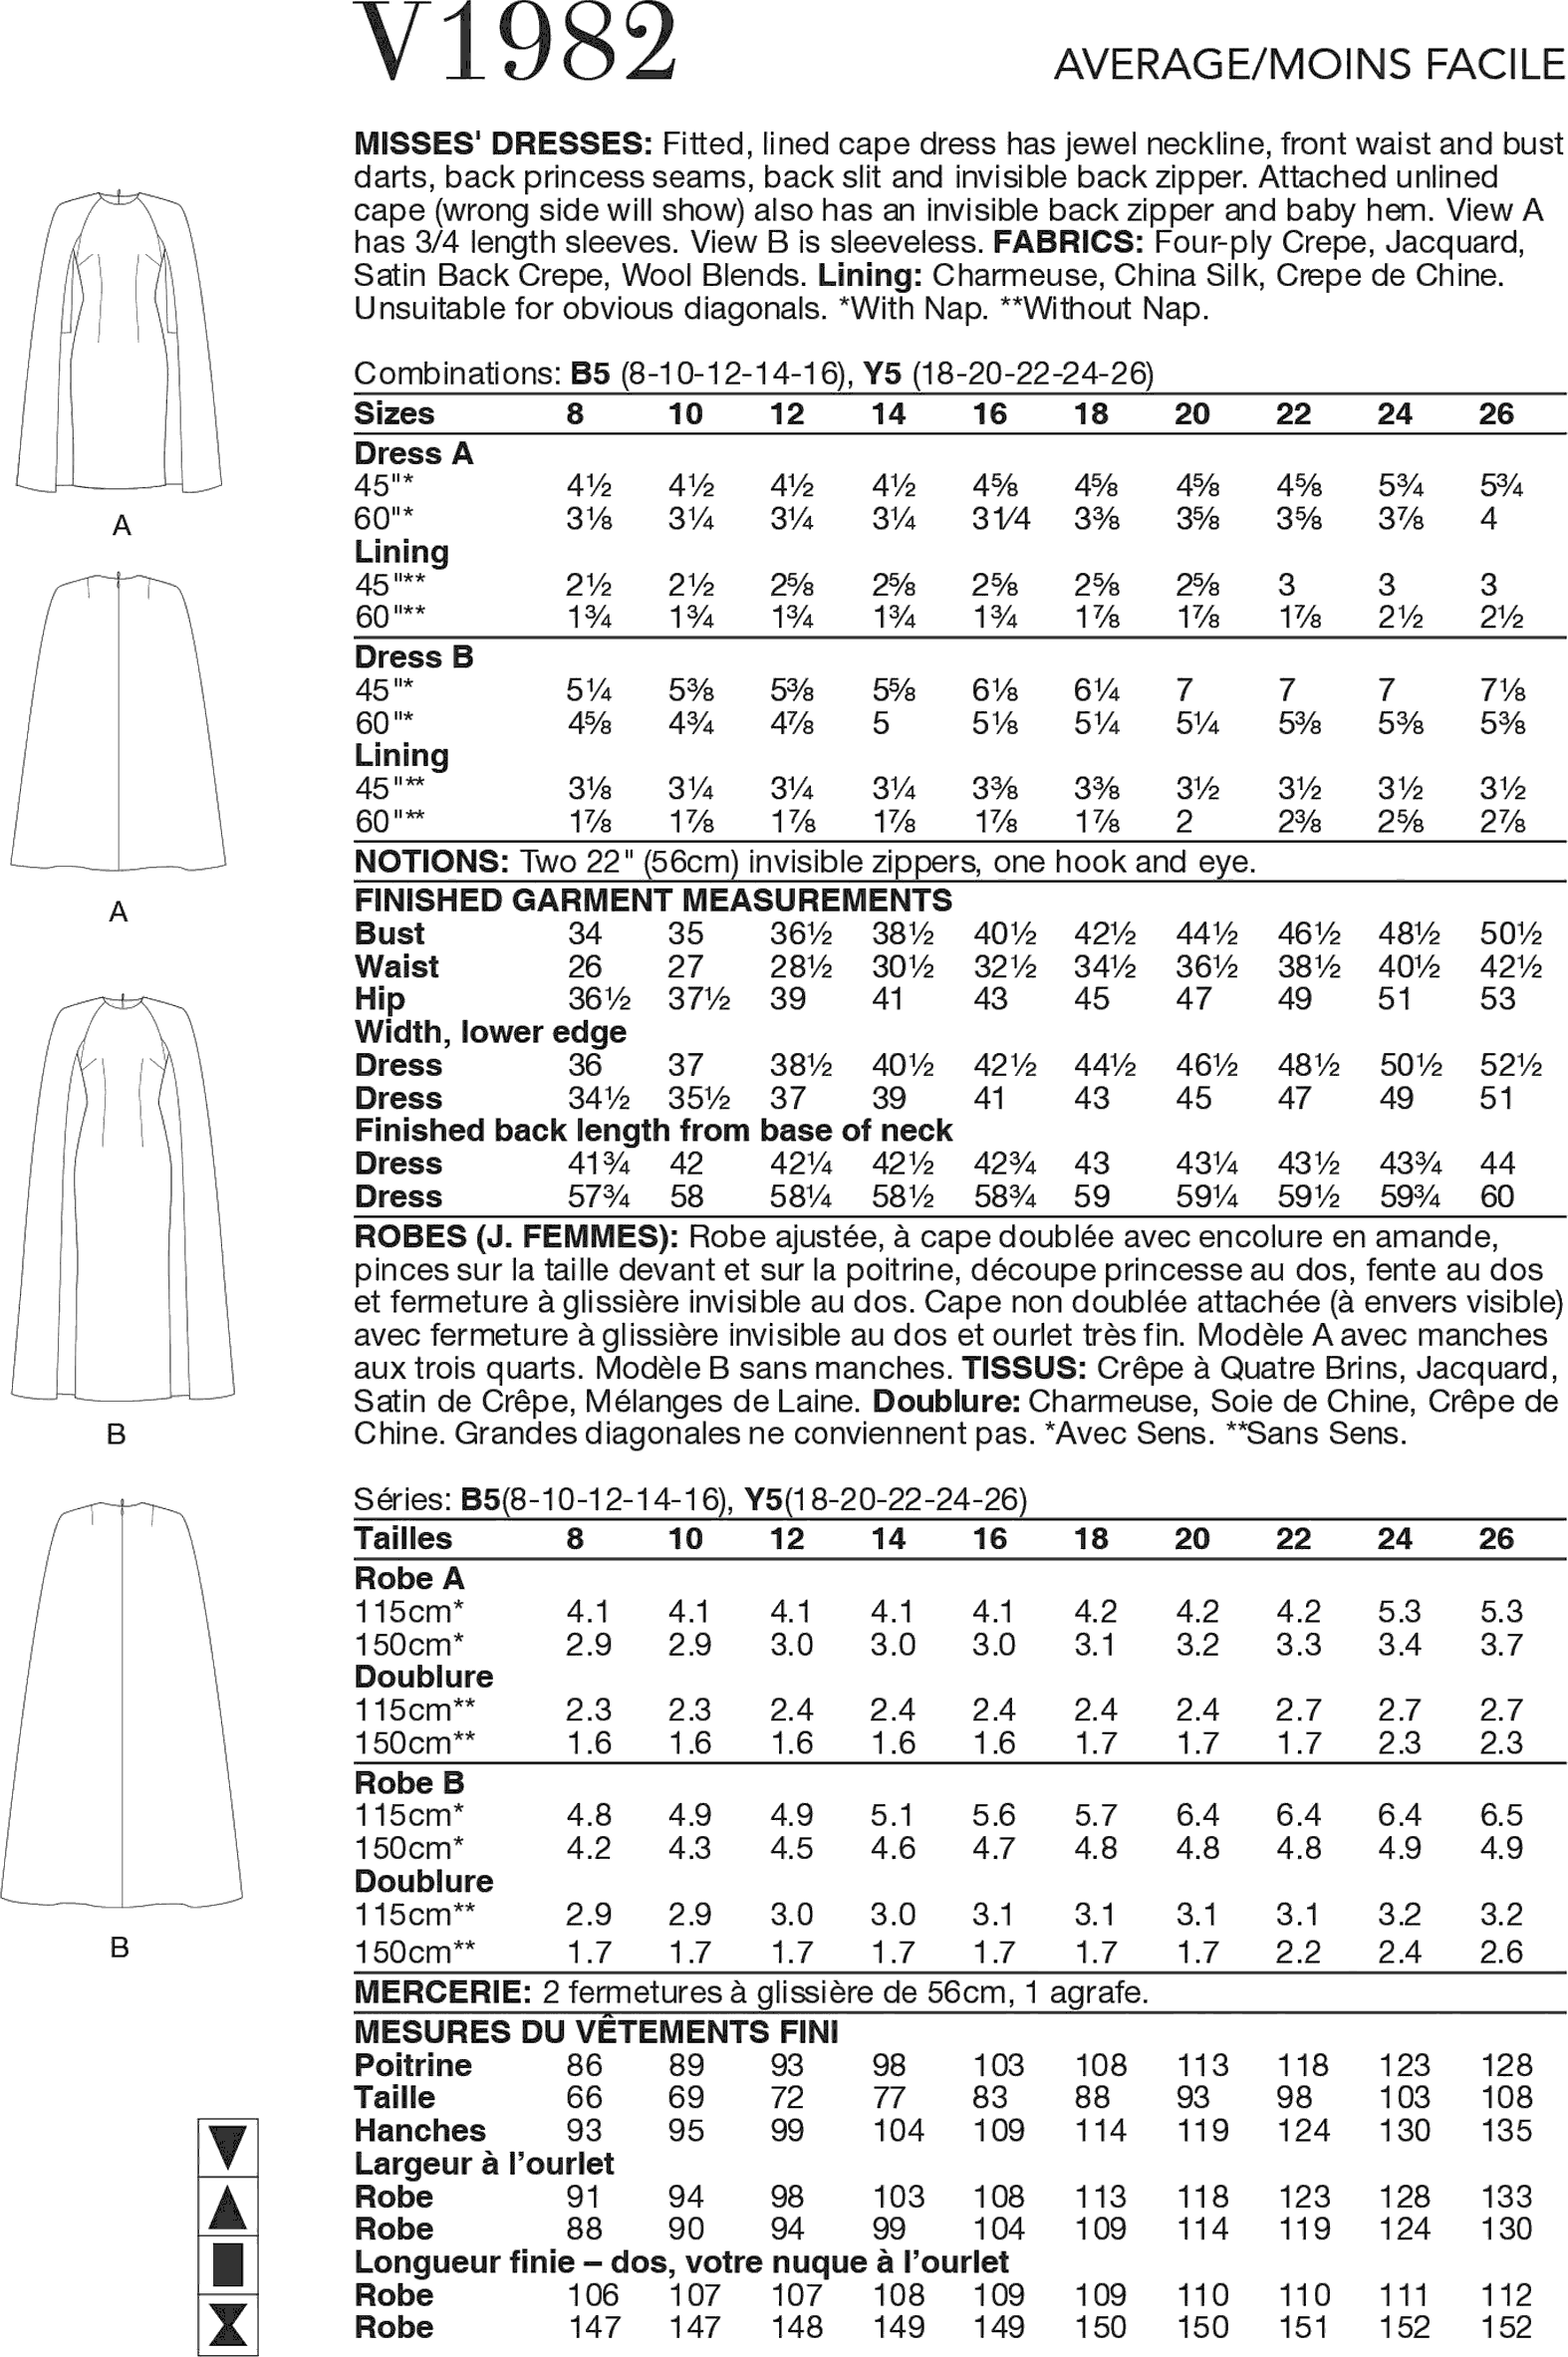 Vogue Pattern V1982 Misses Dresses 1982 Fabric Quantity Requirements From Patternsandplains.com